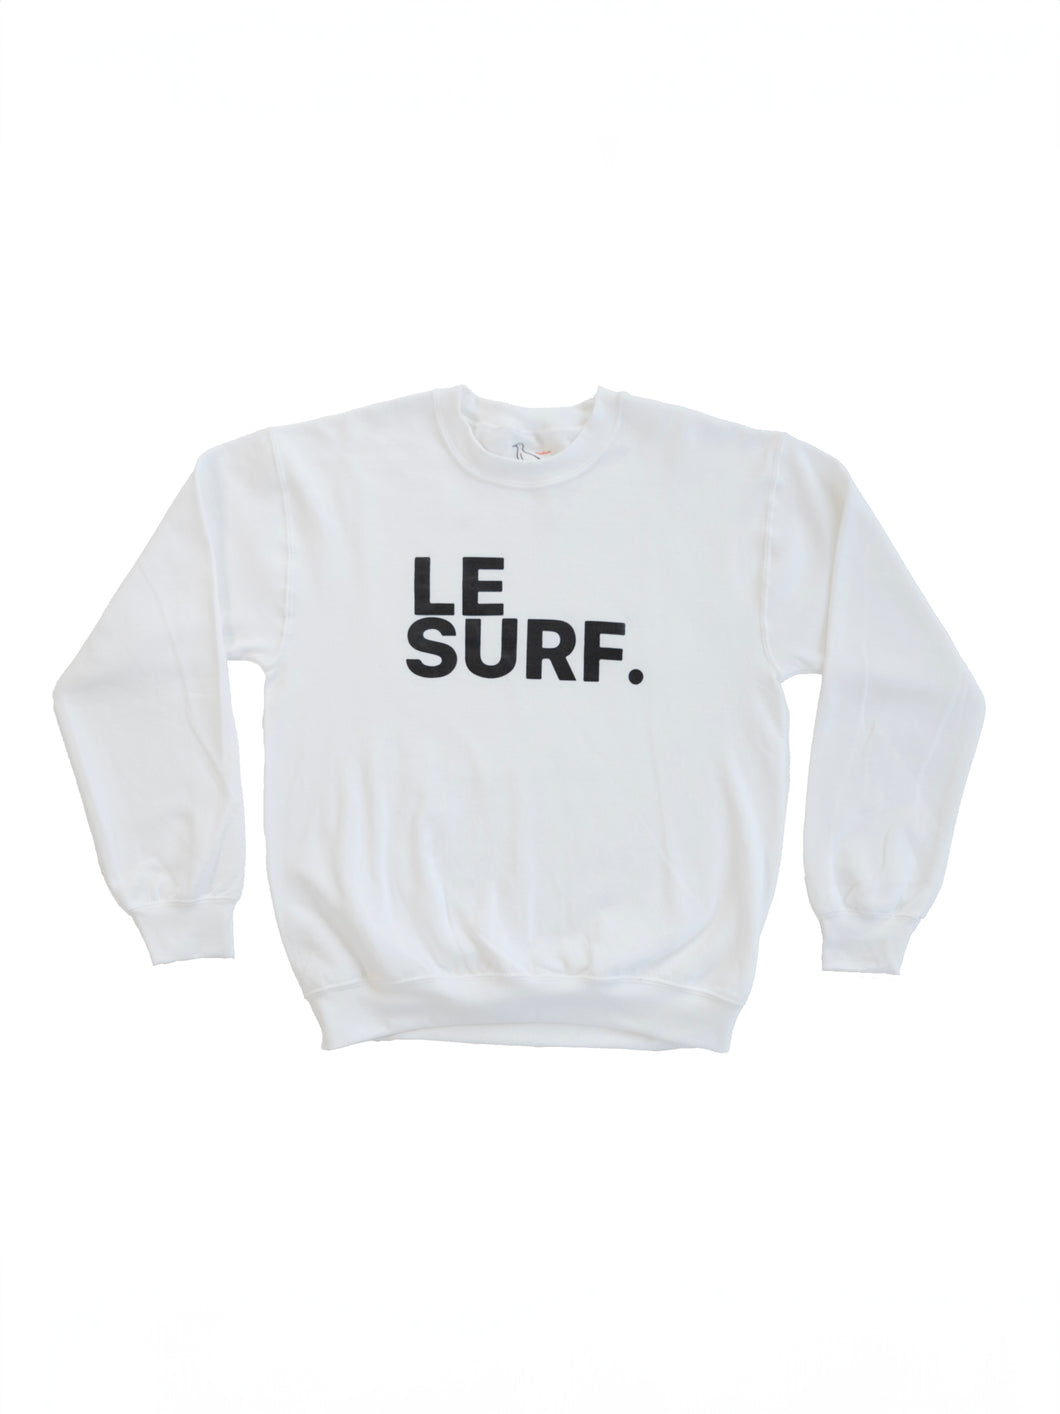 Le SURF. Sweatshirt WHITE / BLACK LOGO